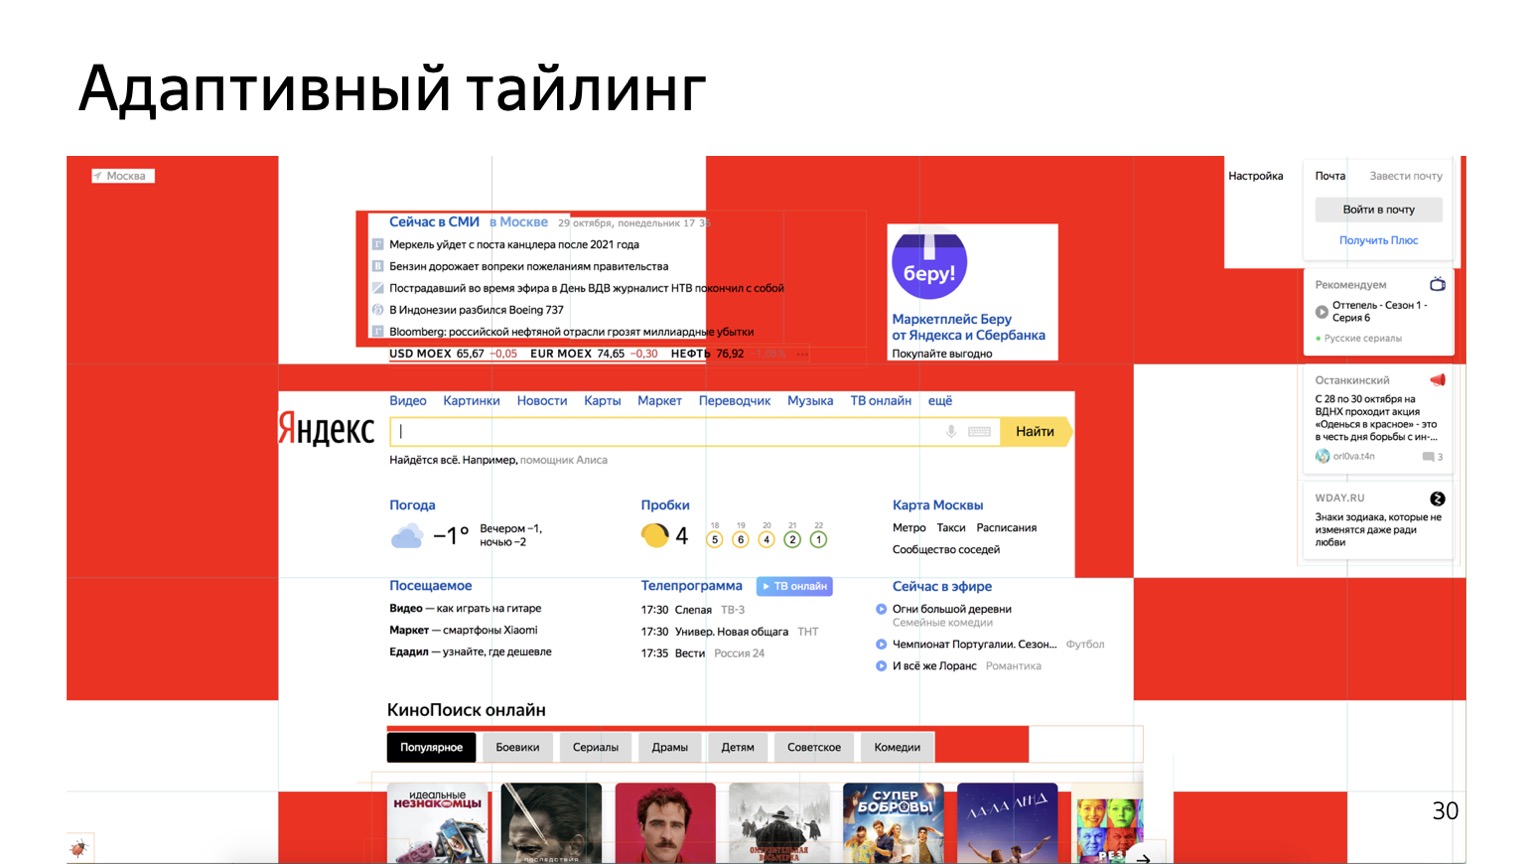 Как рисует браузер. Доклад Яндекса - 29